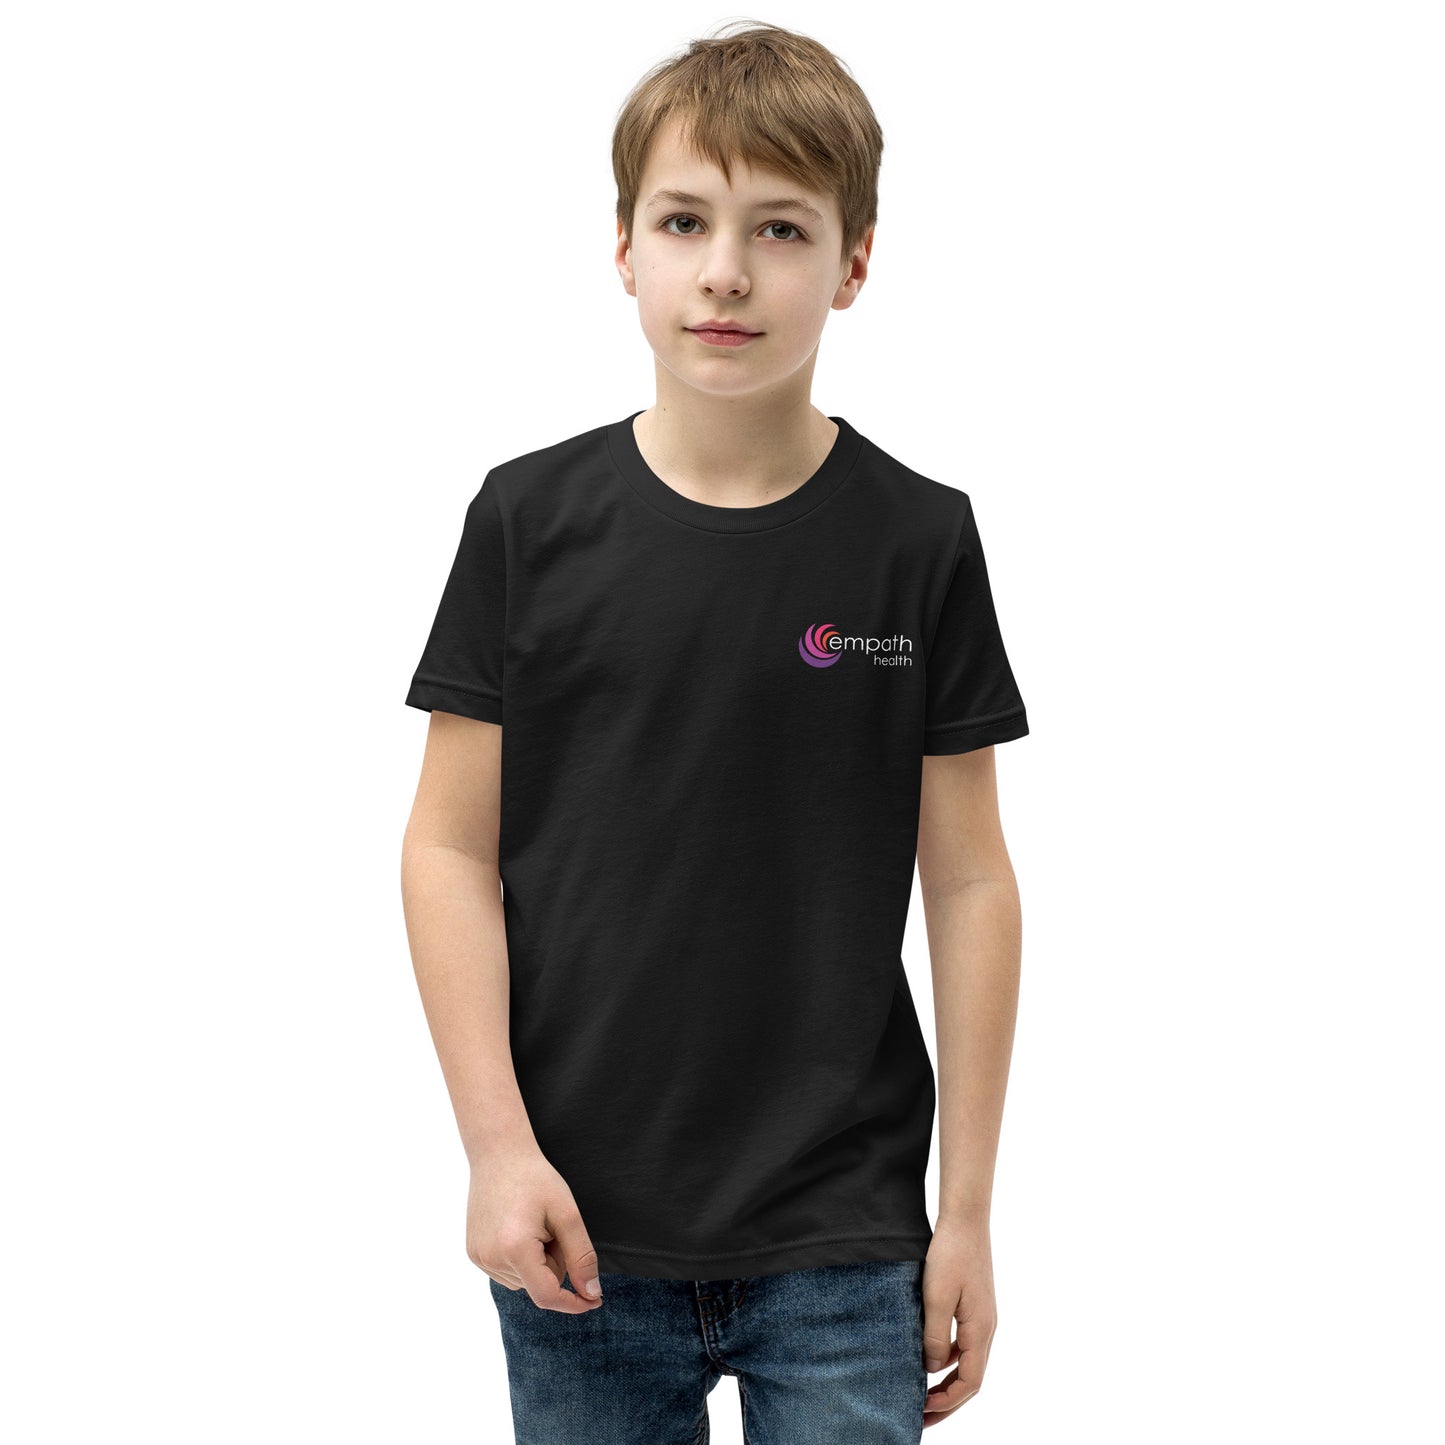 Youth Short Sleeve T-Shirt - Empath Health